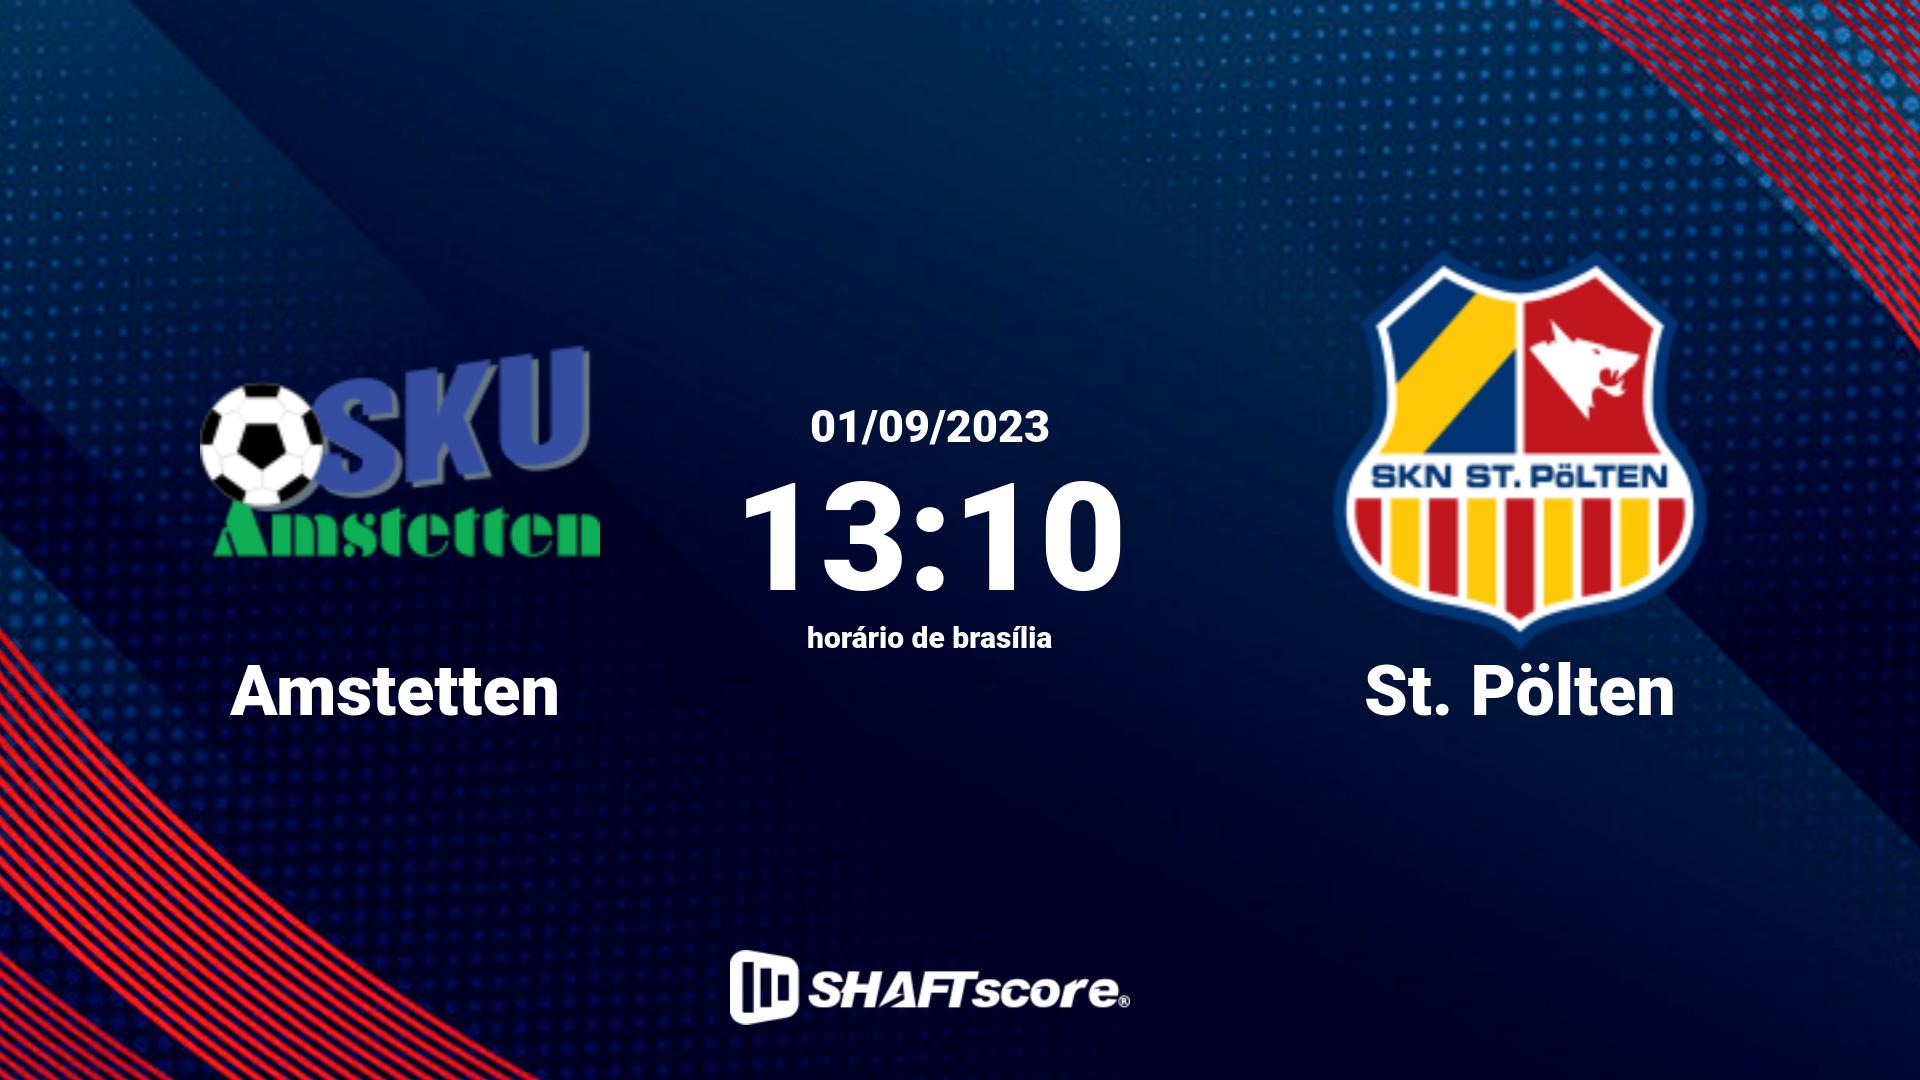 Estatísticas do jogo Amstetten vs St. Pölten 01.09 13:10